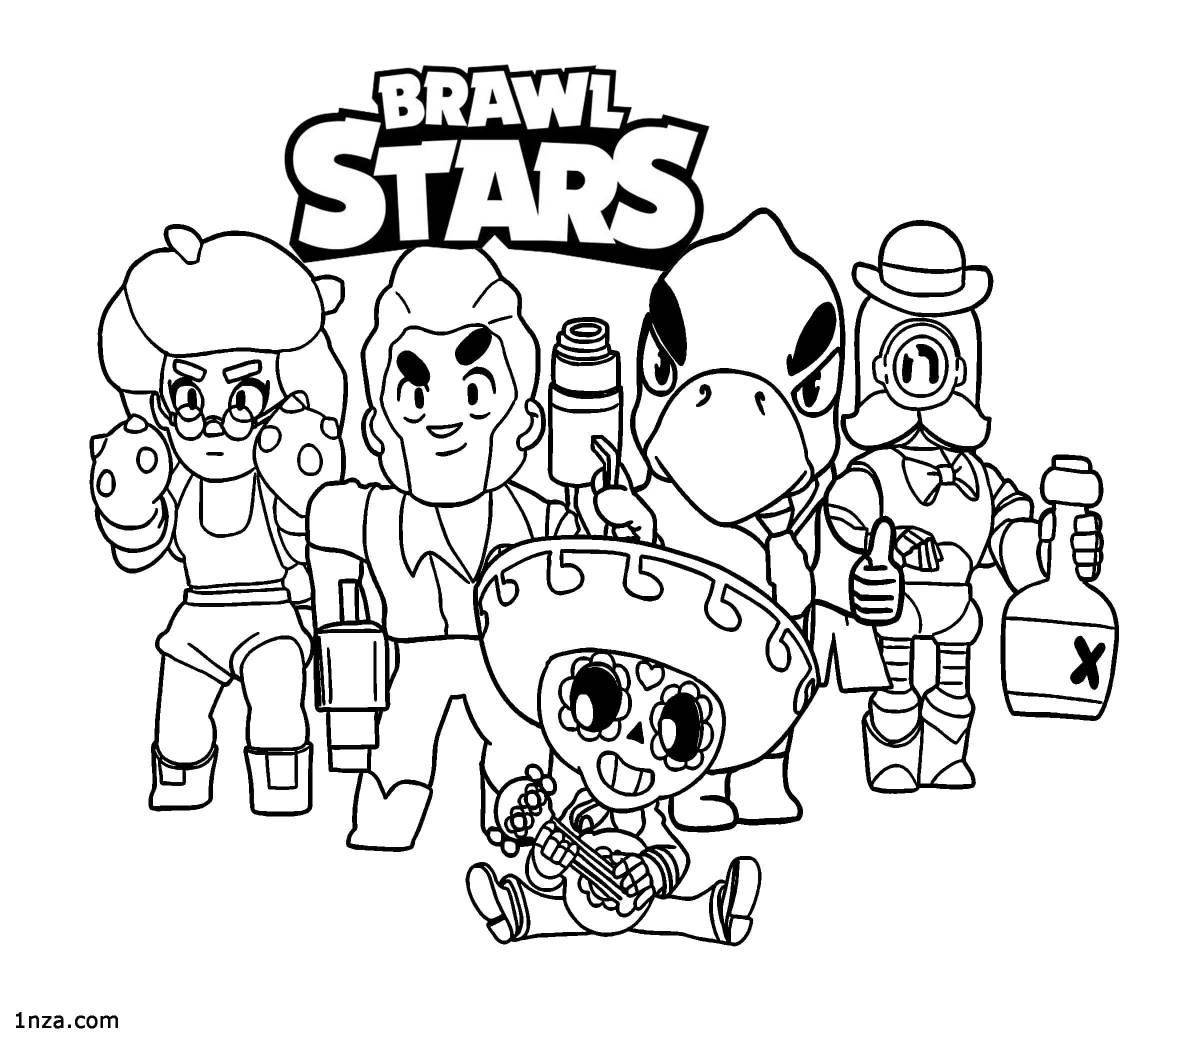 Bravo stars dazzling coloring book